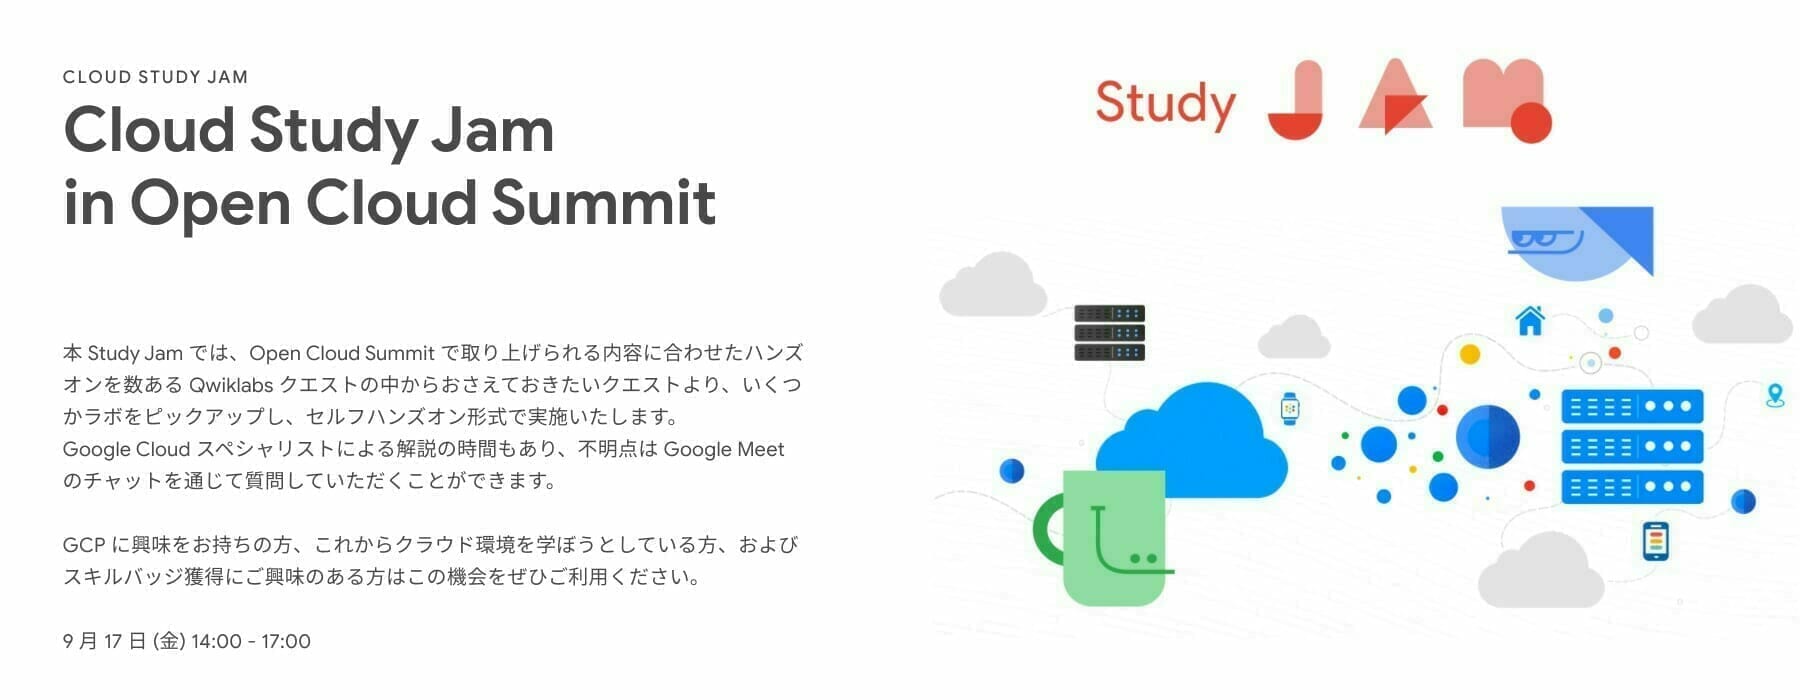 [GCP] Cloud Study Jam in Open Cloud Summit